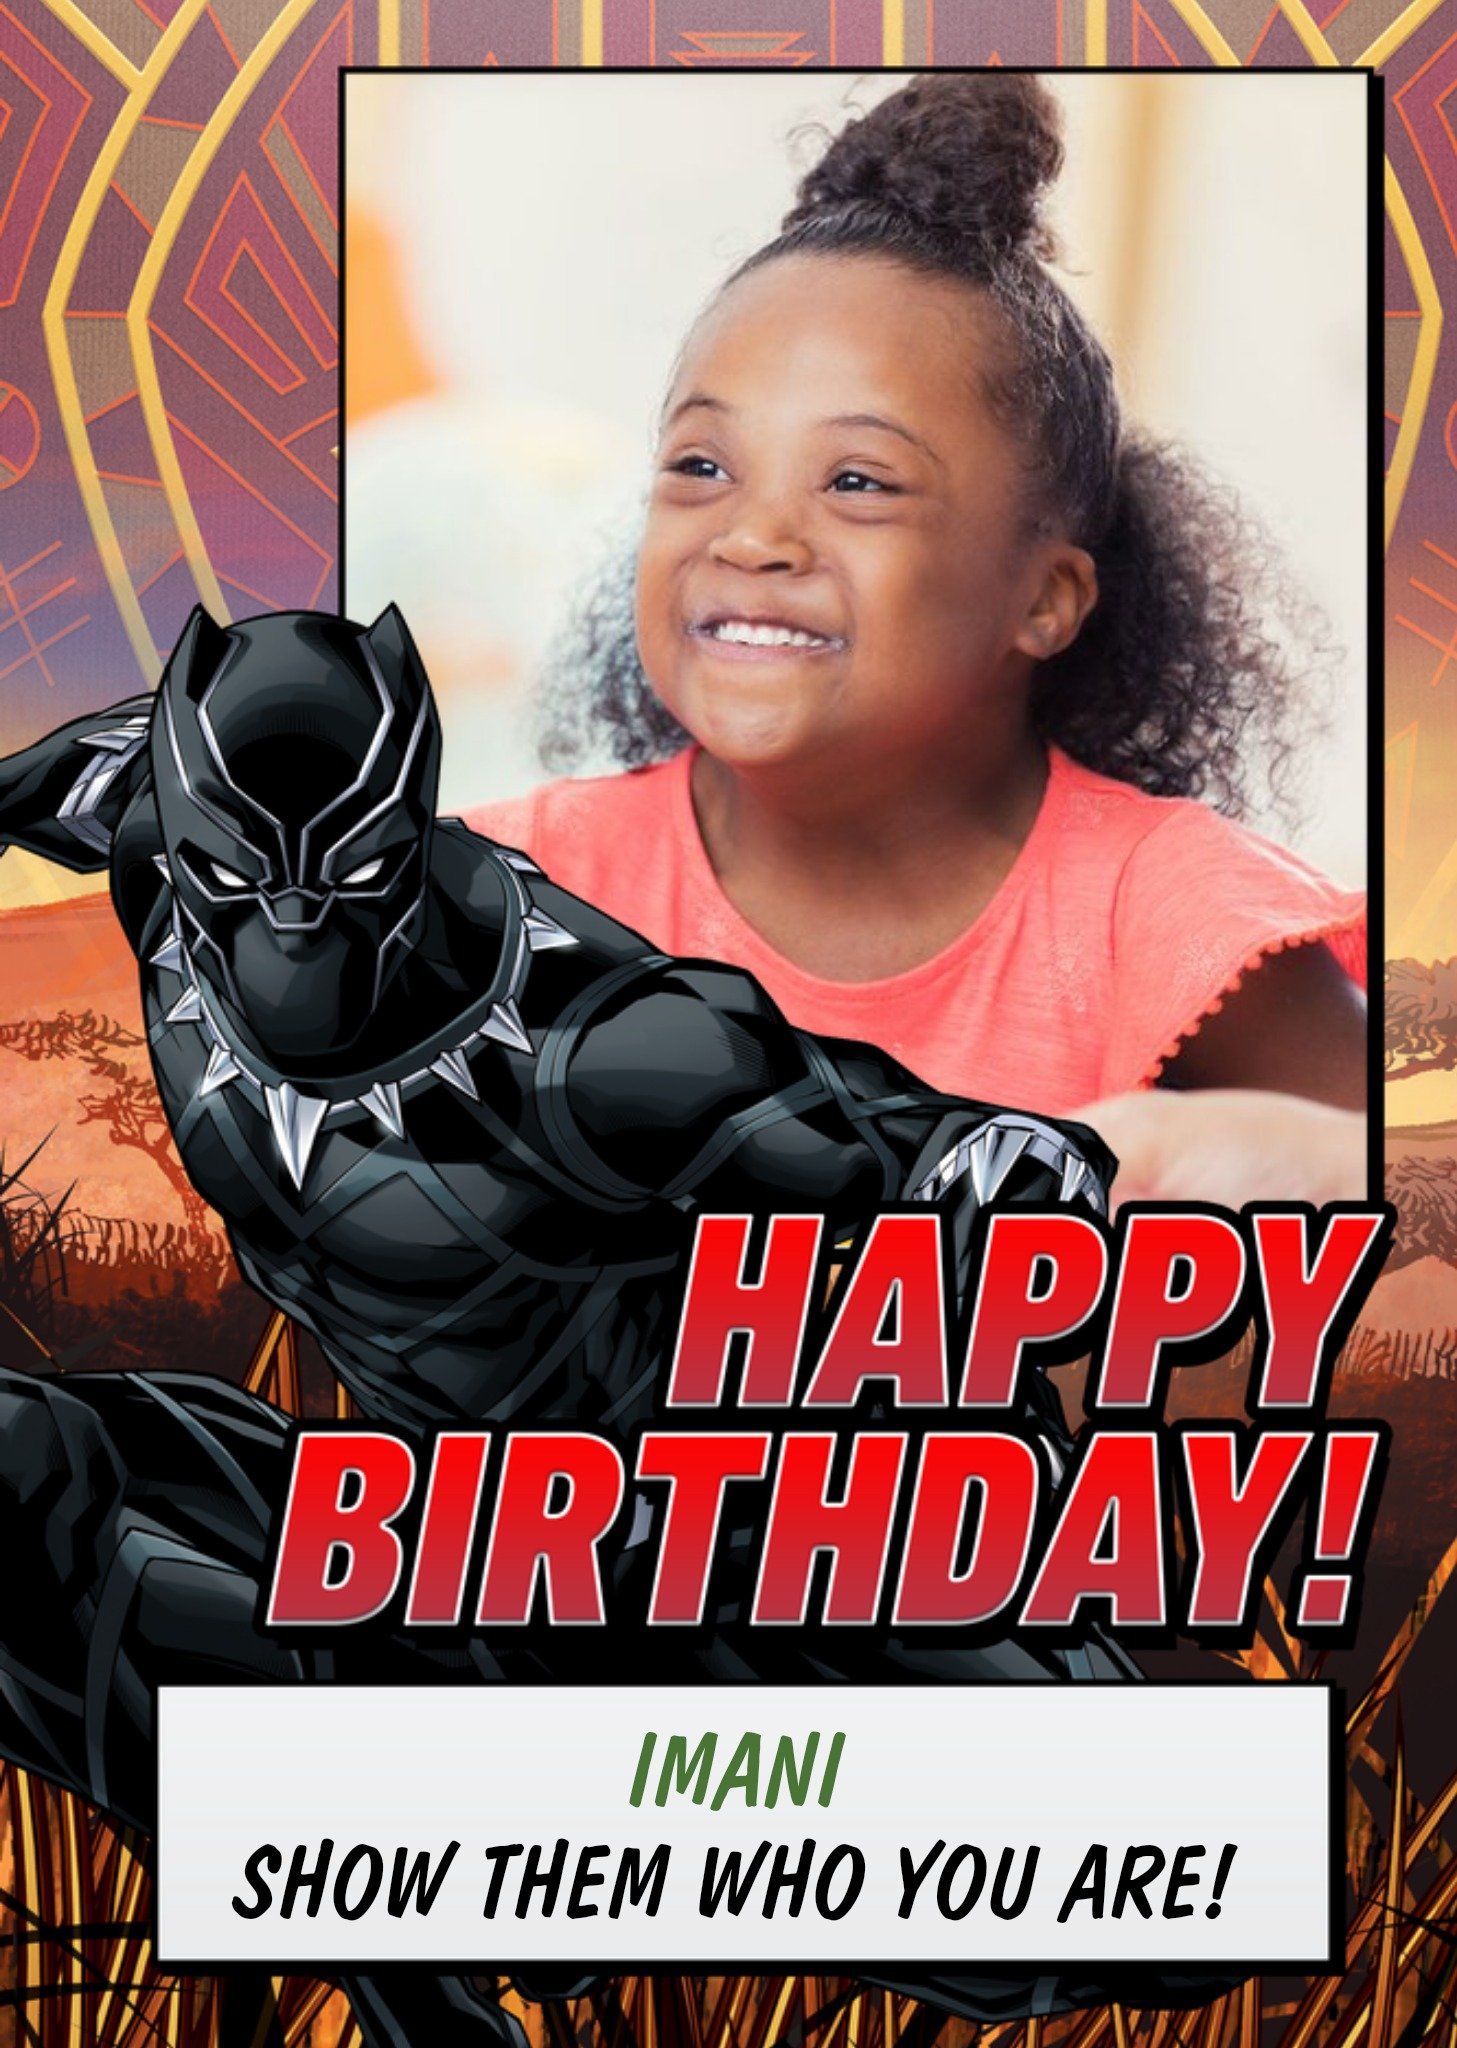 Marvel Avengers Black Panther Comic Book Photo Upload Birthday Card Ecard